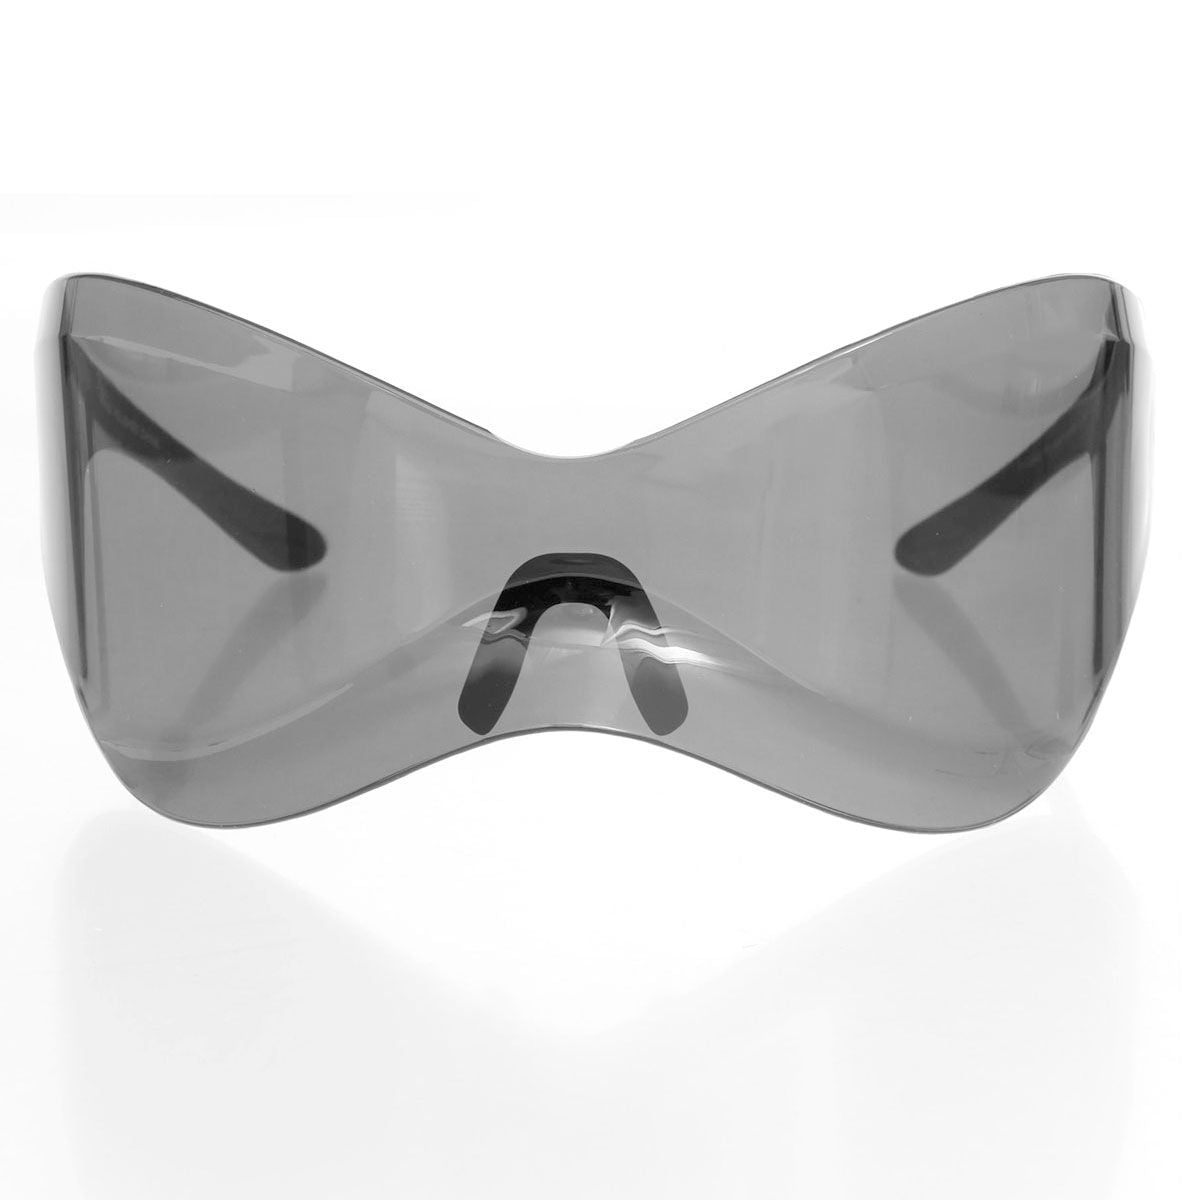 Sunglasses Mask Wrap Black Eyewear for Women